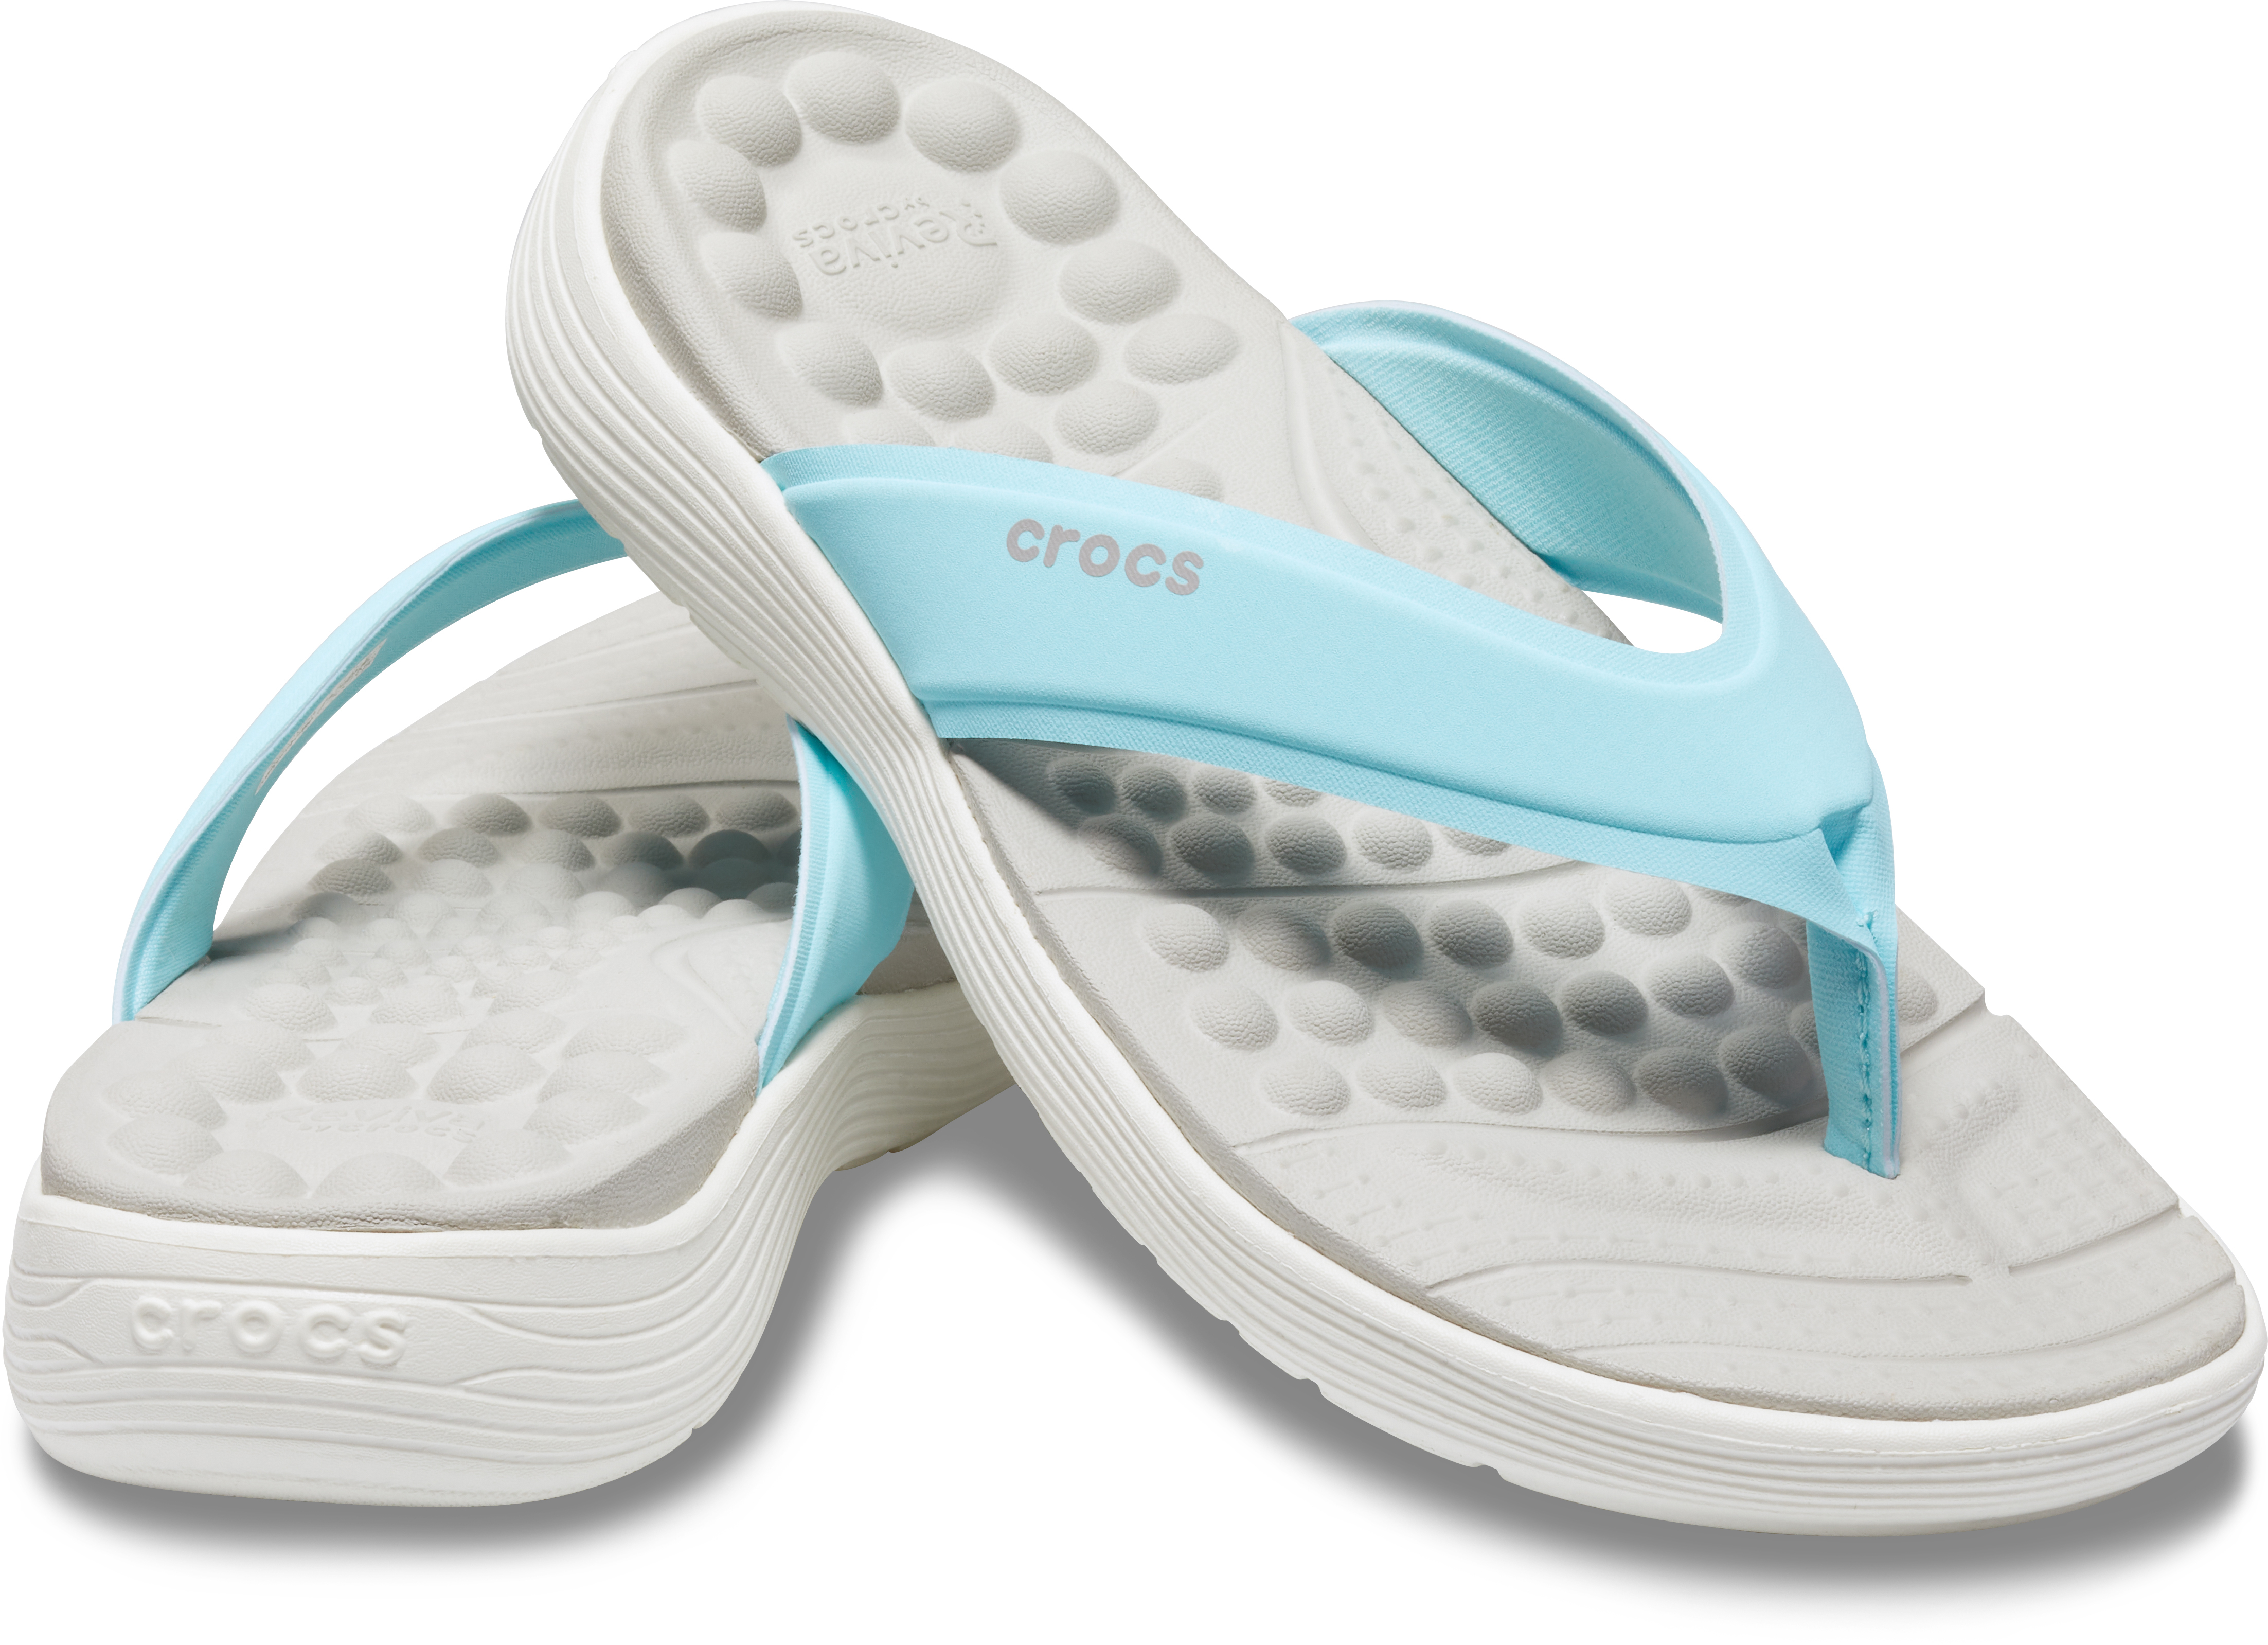 dual crocs comfort price